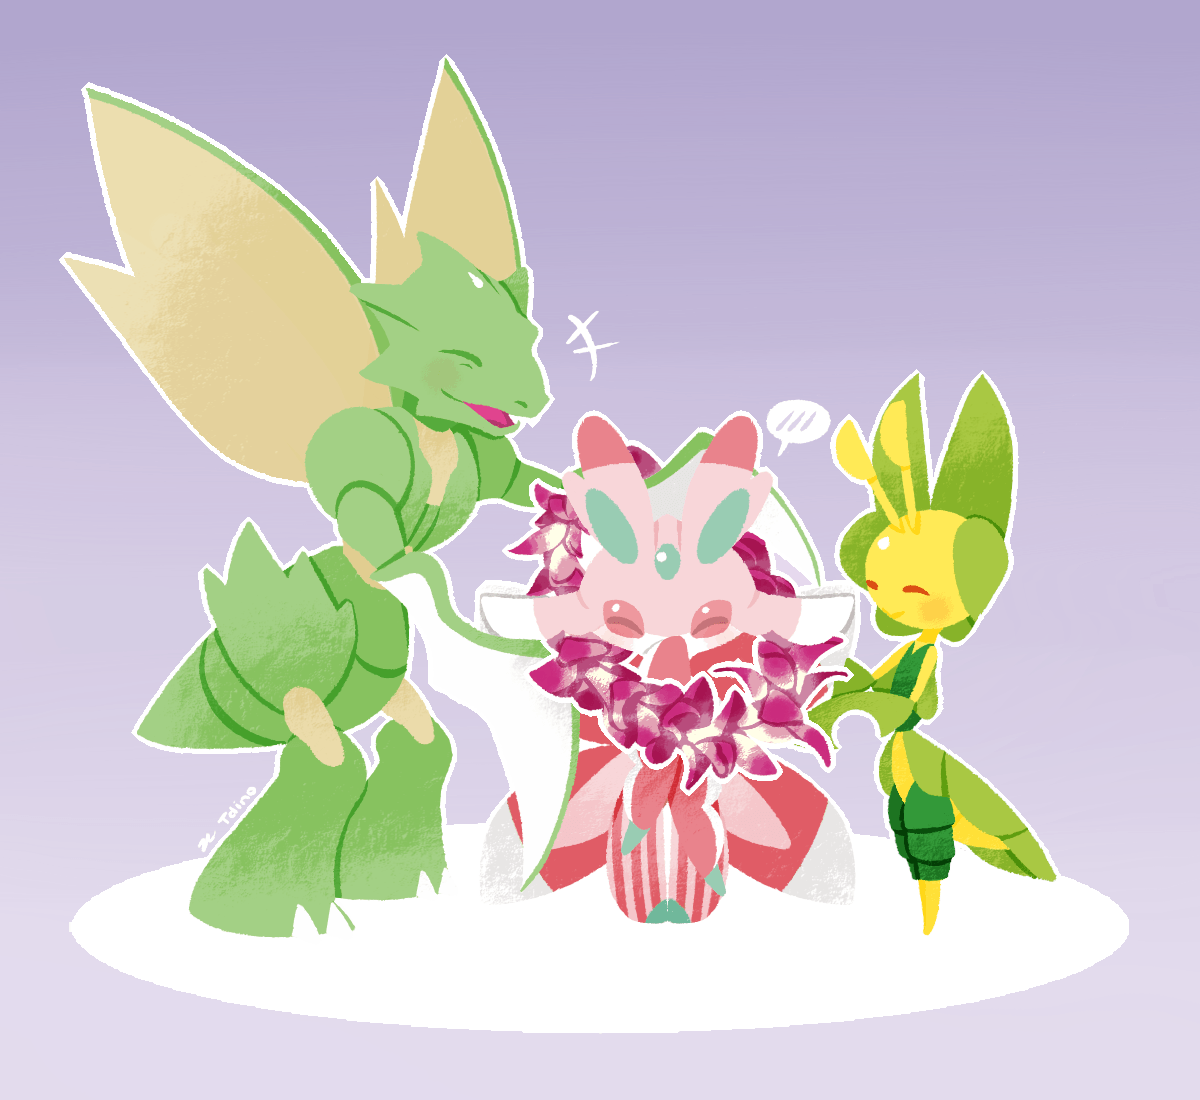 Scyther, Lurantis, and Leavanny. pokemon. Pokémon